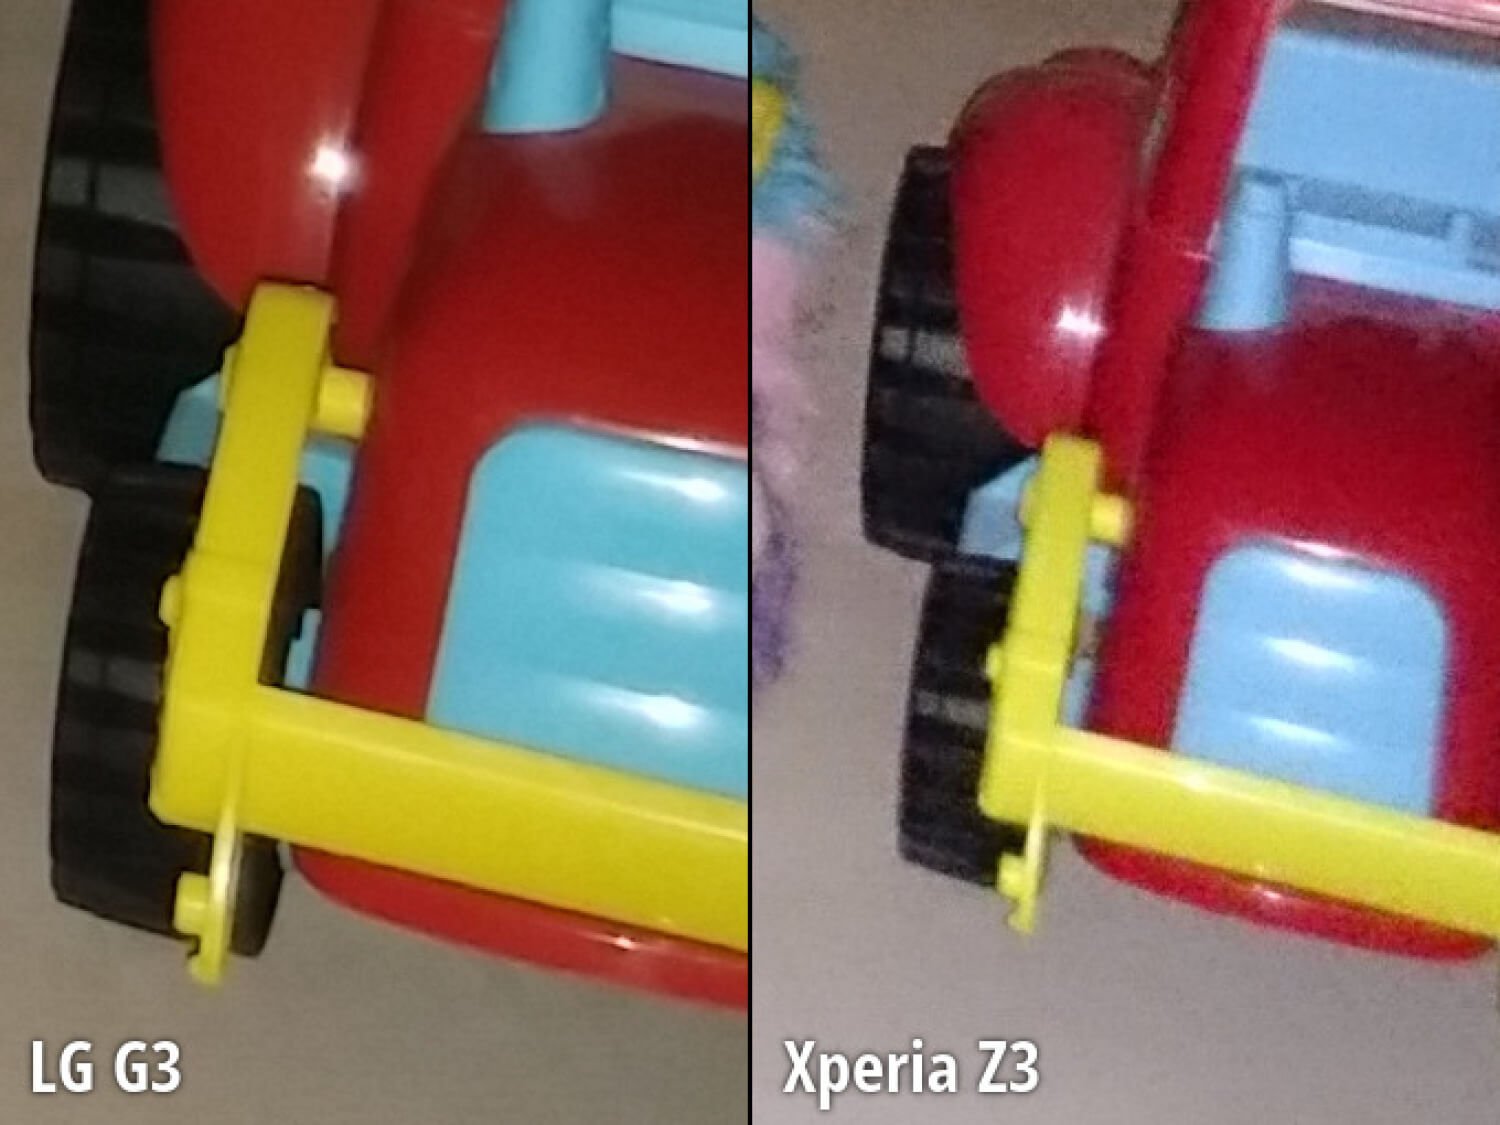 LG-G3-vs-Xperia-Z3-photos-crop-zoom-9